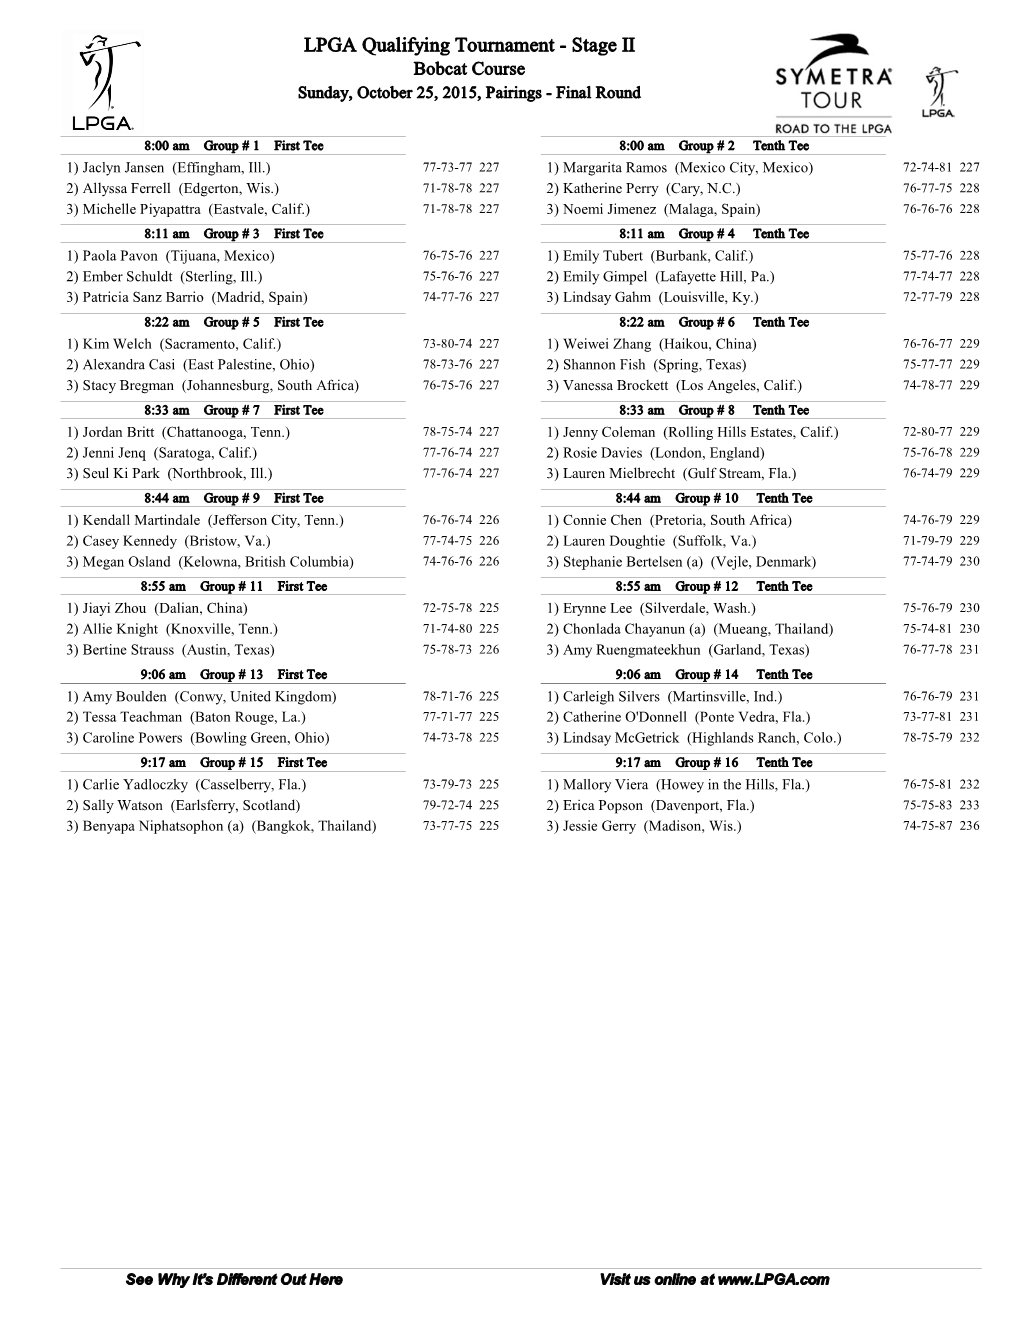 LPGA Qualifying Tournament - Stage II Bobcat Course Sunday, October 25, 2015, Pairings - Final Round